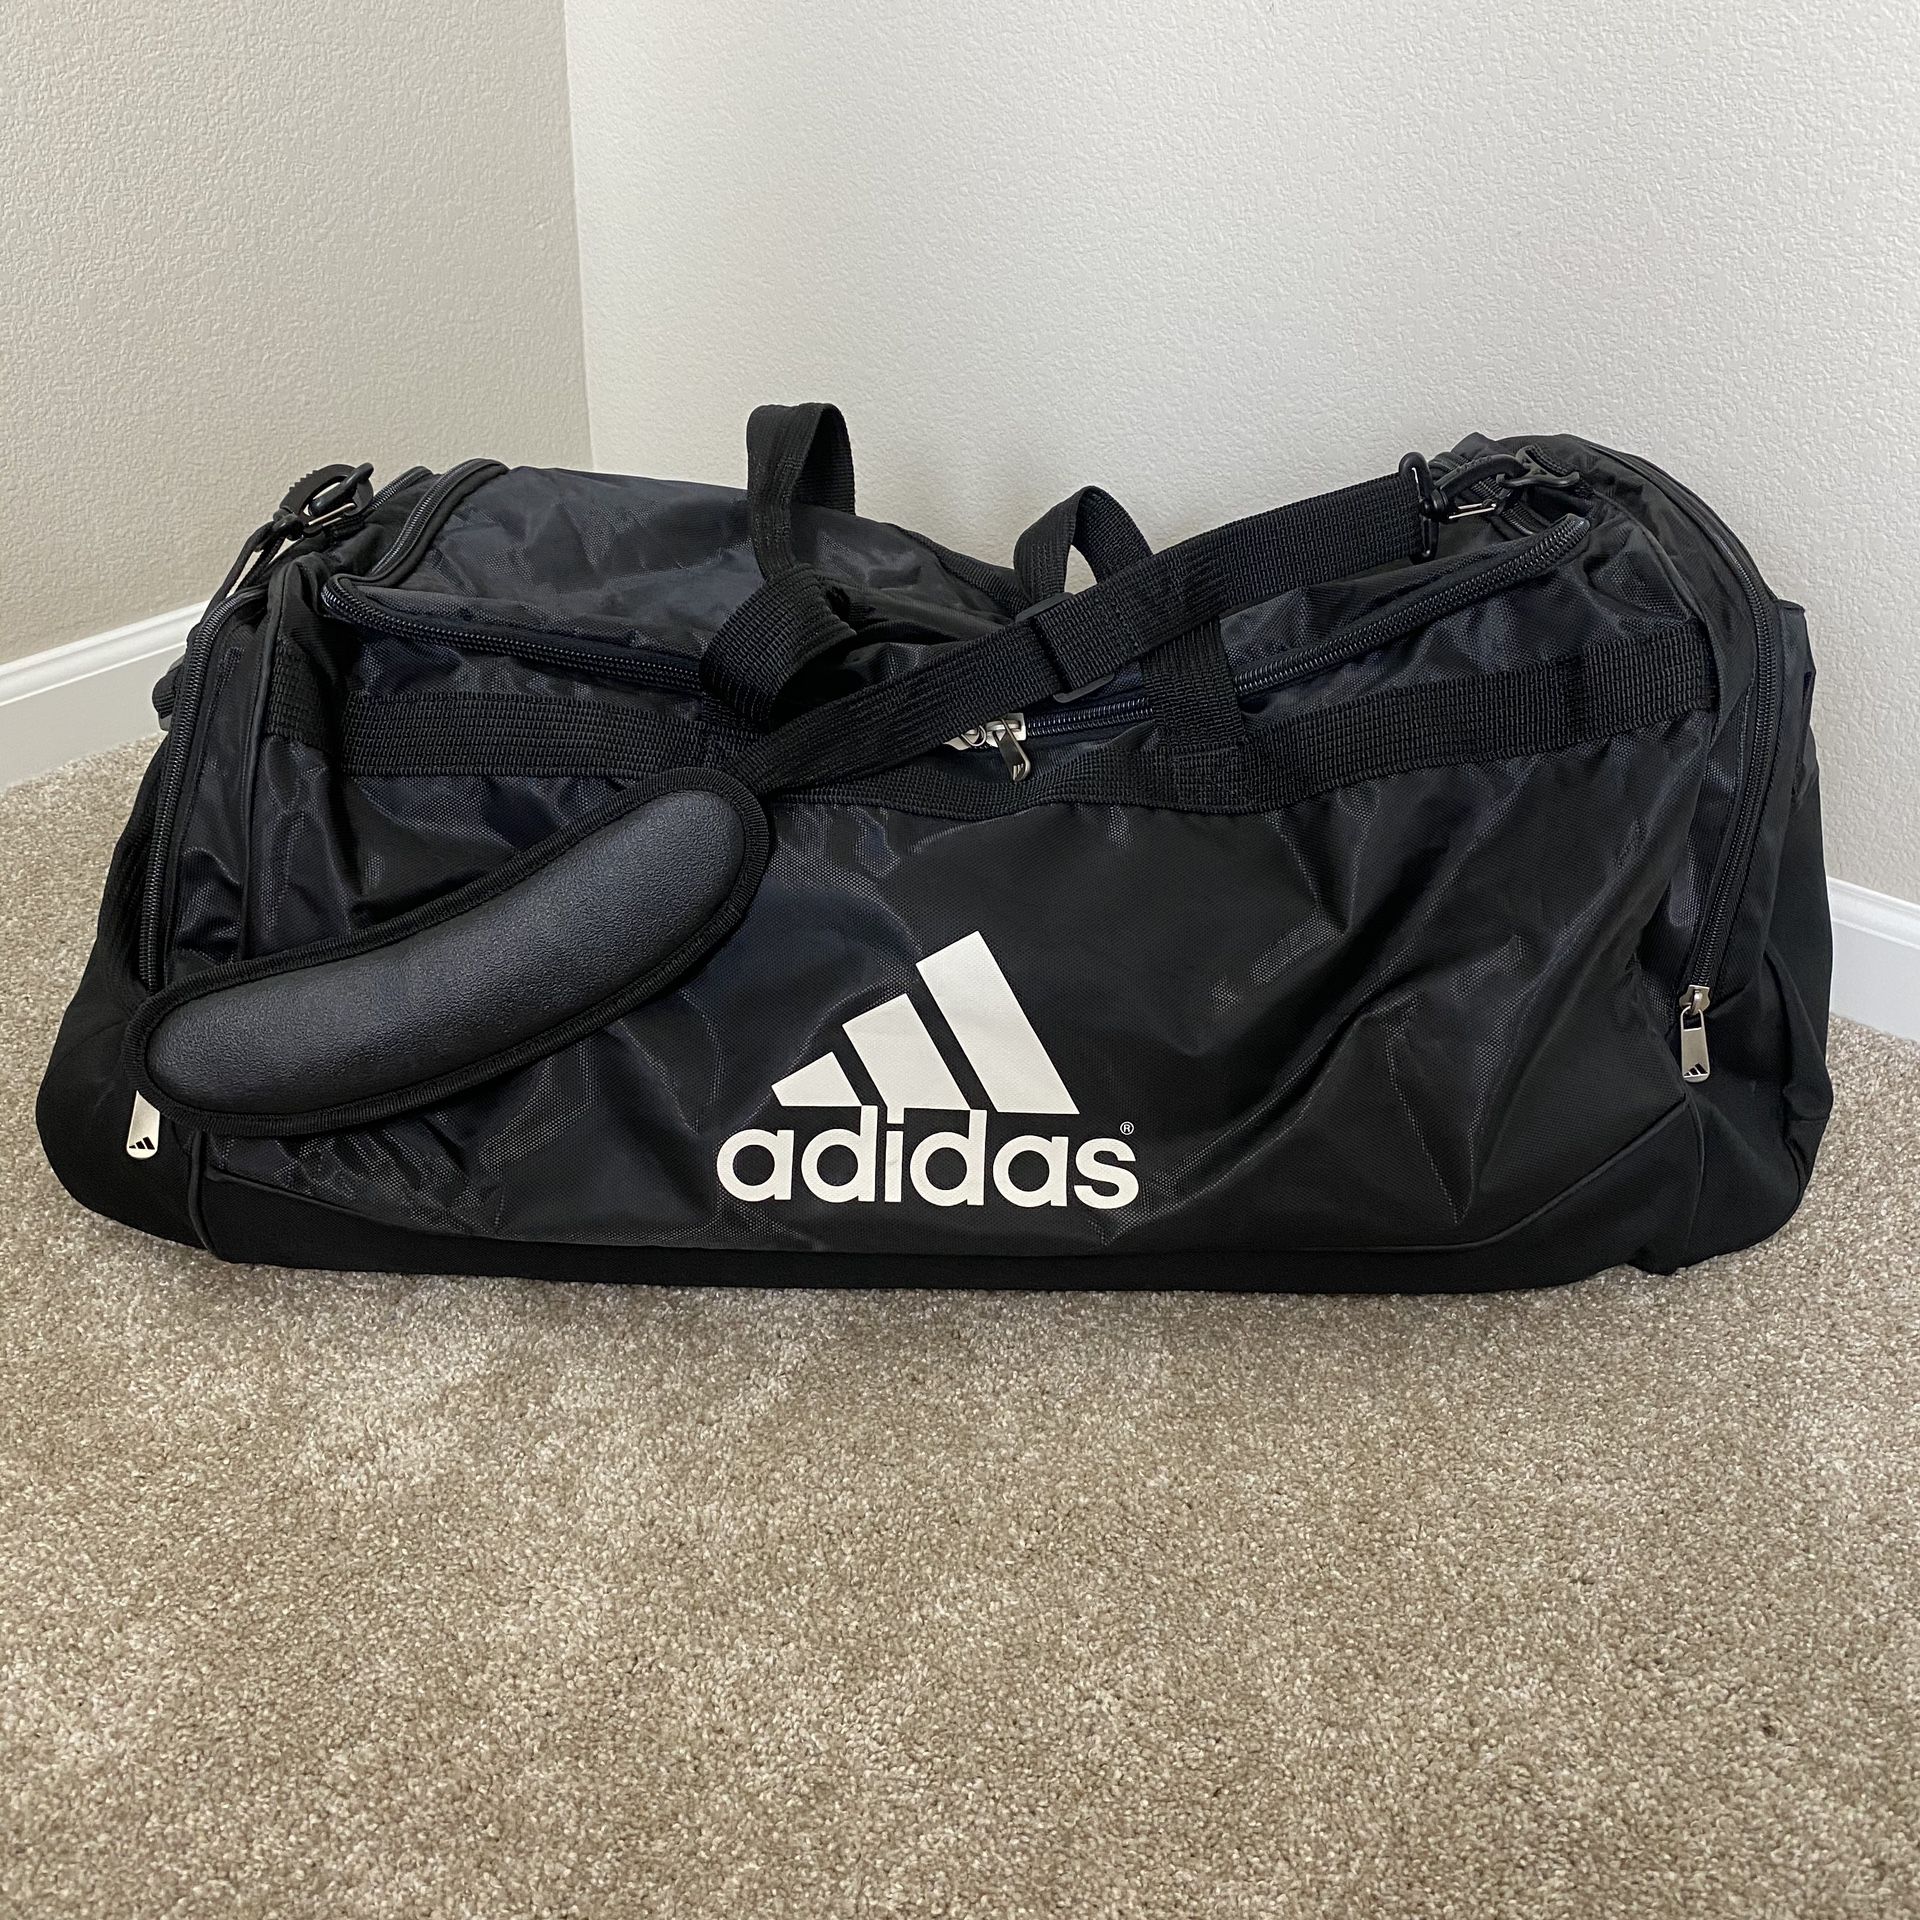 Adidas large duffle travel bag black